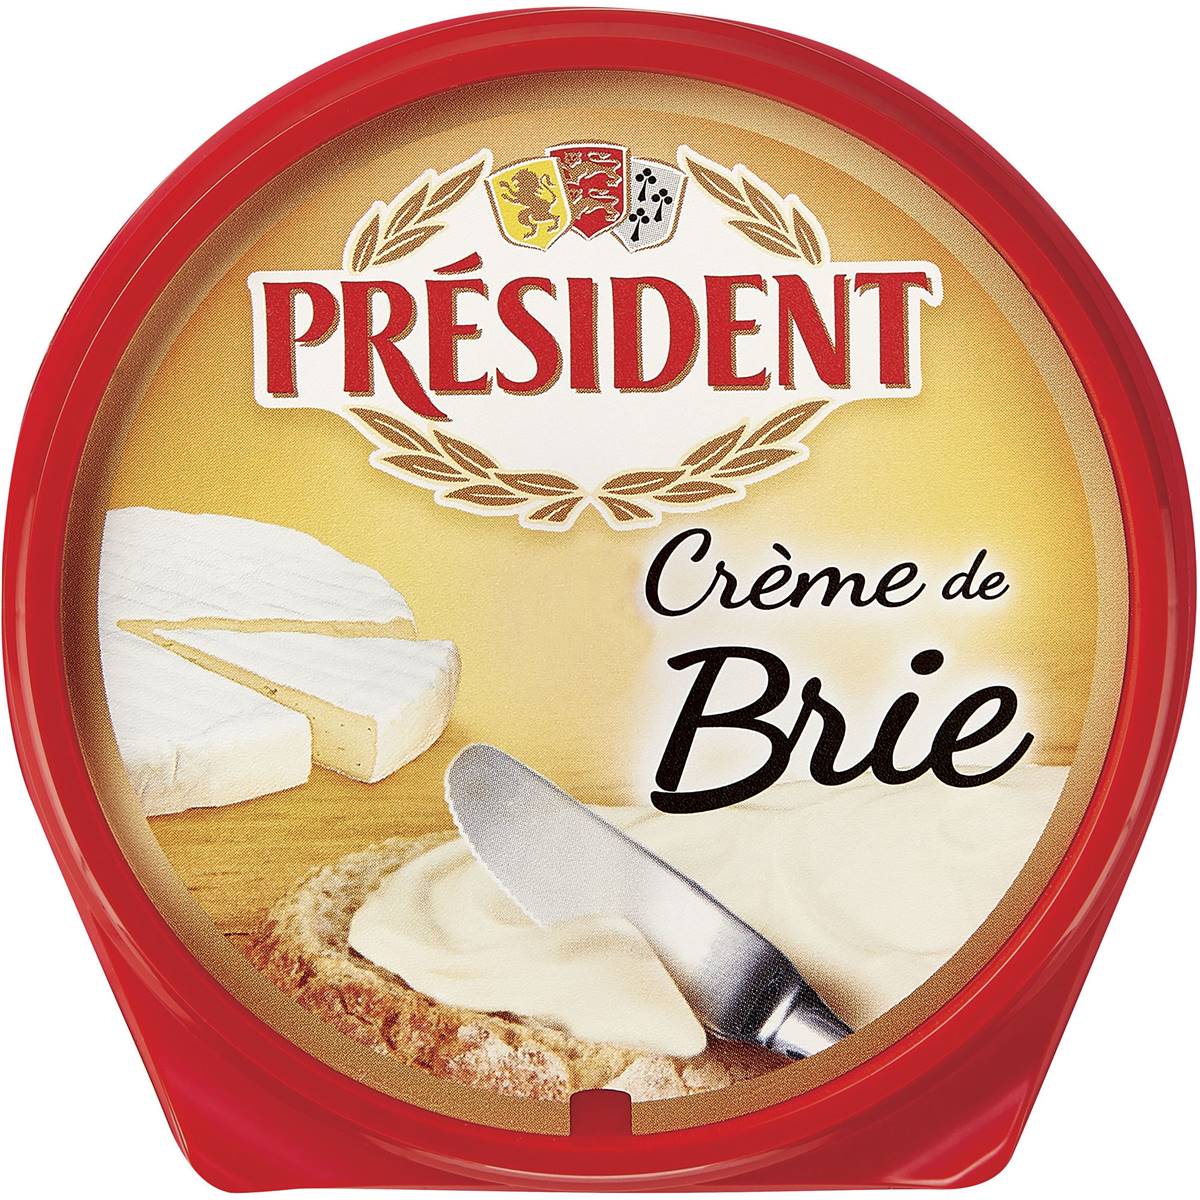 President Creamy Brie Cheese Dip 125g